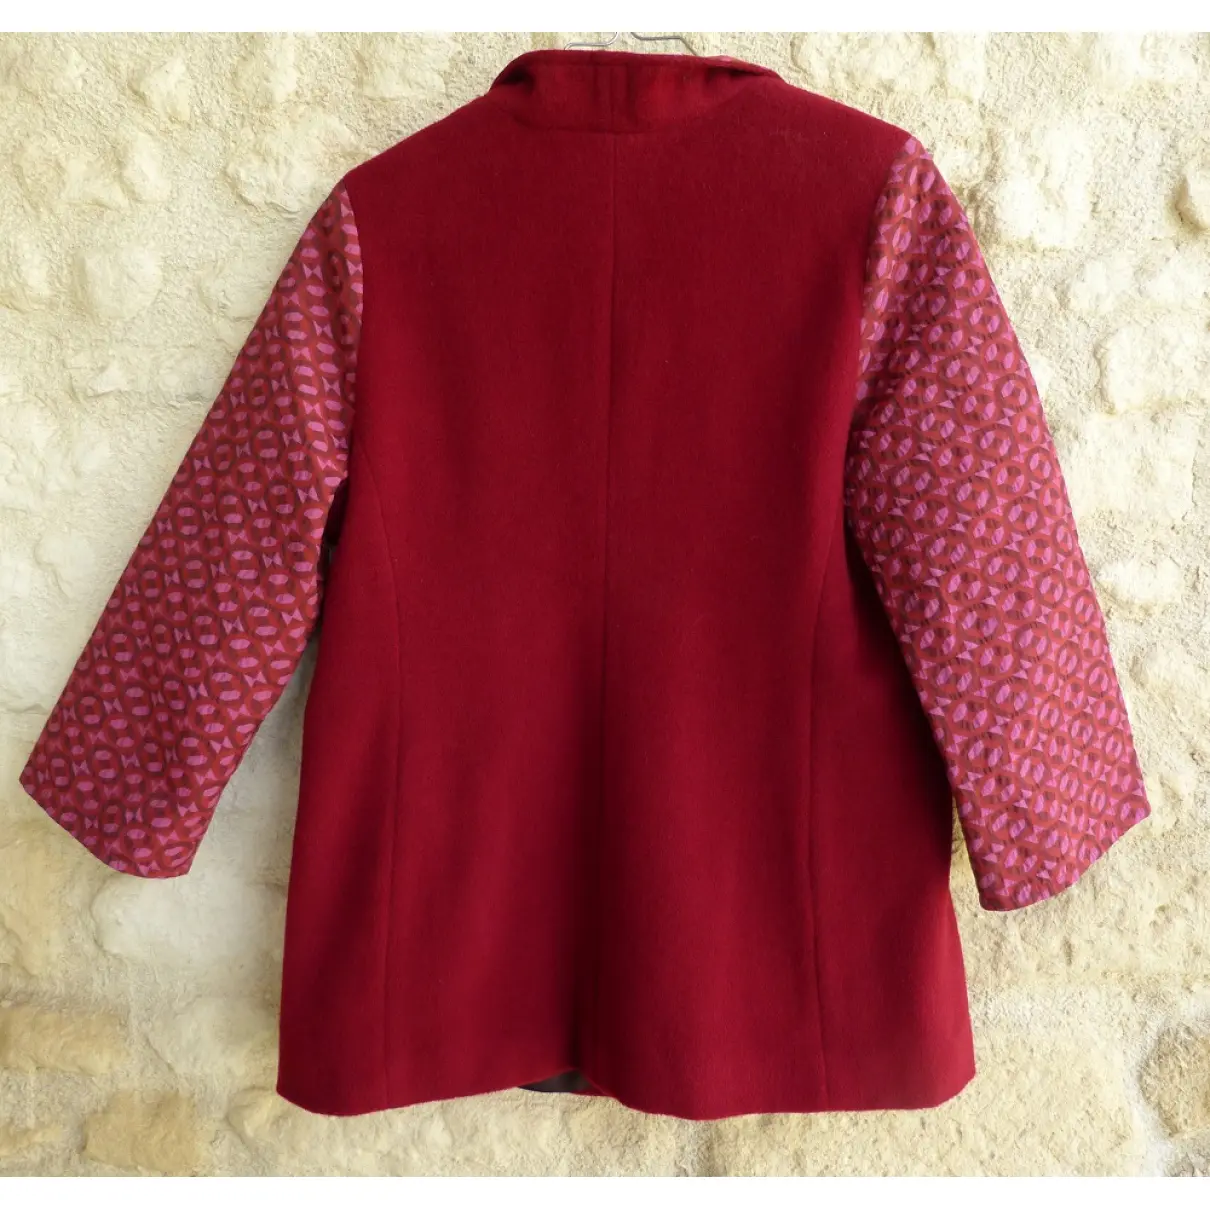 Buy Lanvin Wool coat online - Vintage